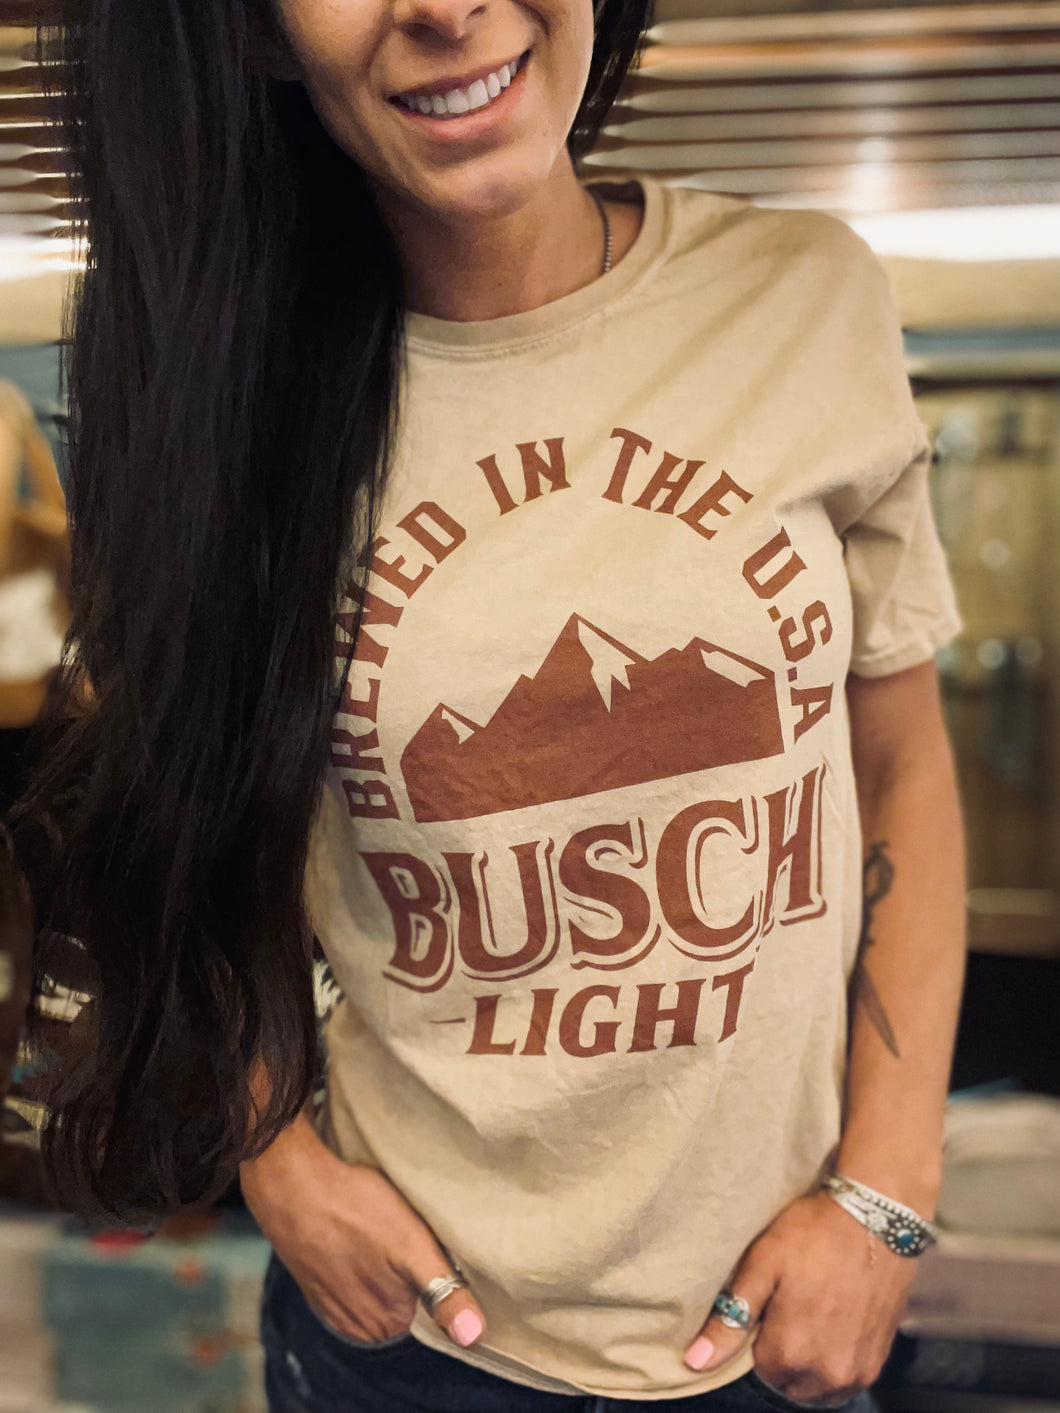 Bush Light